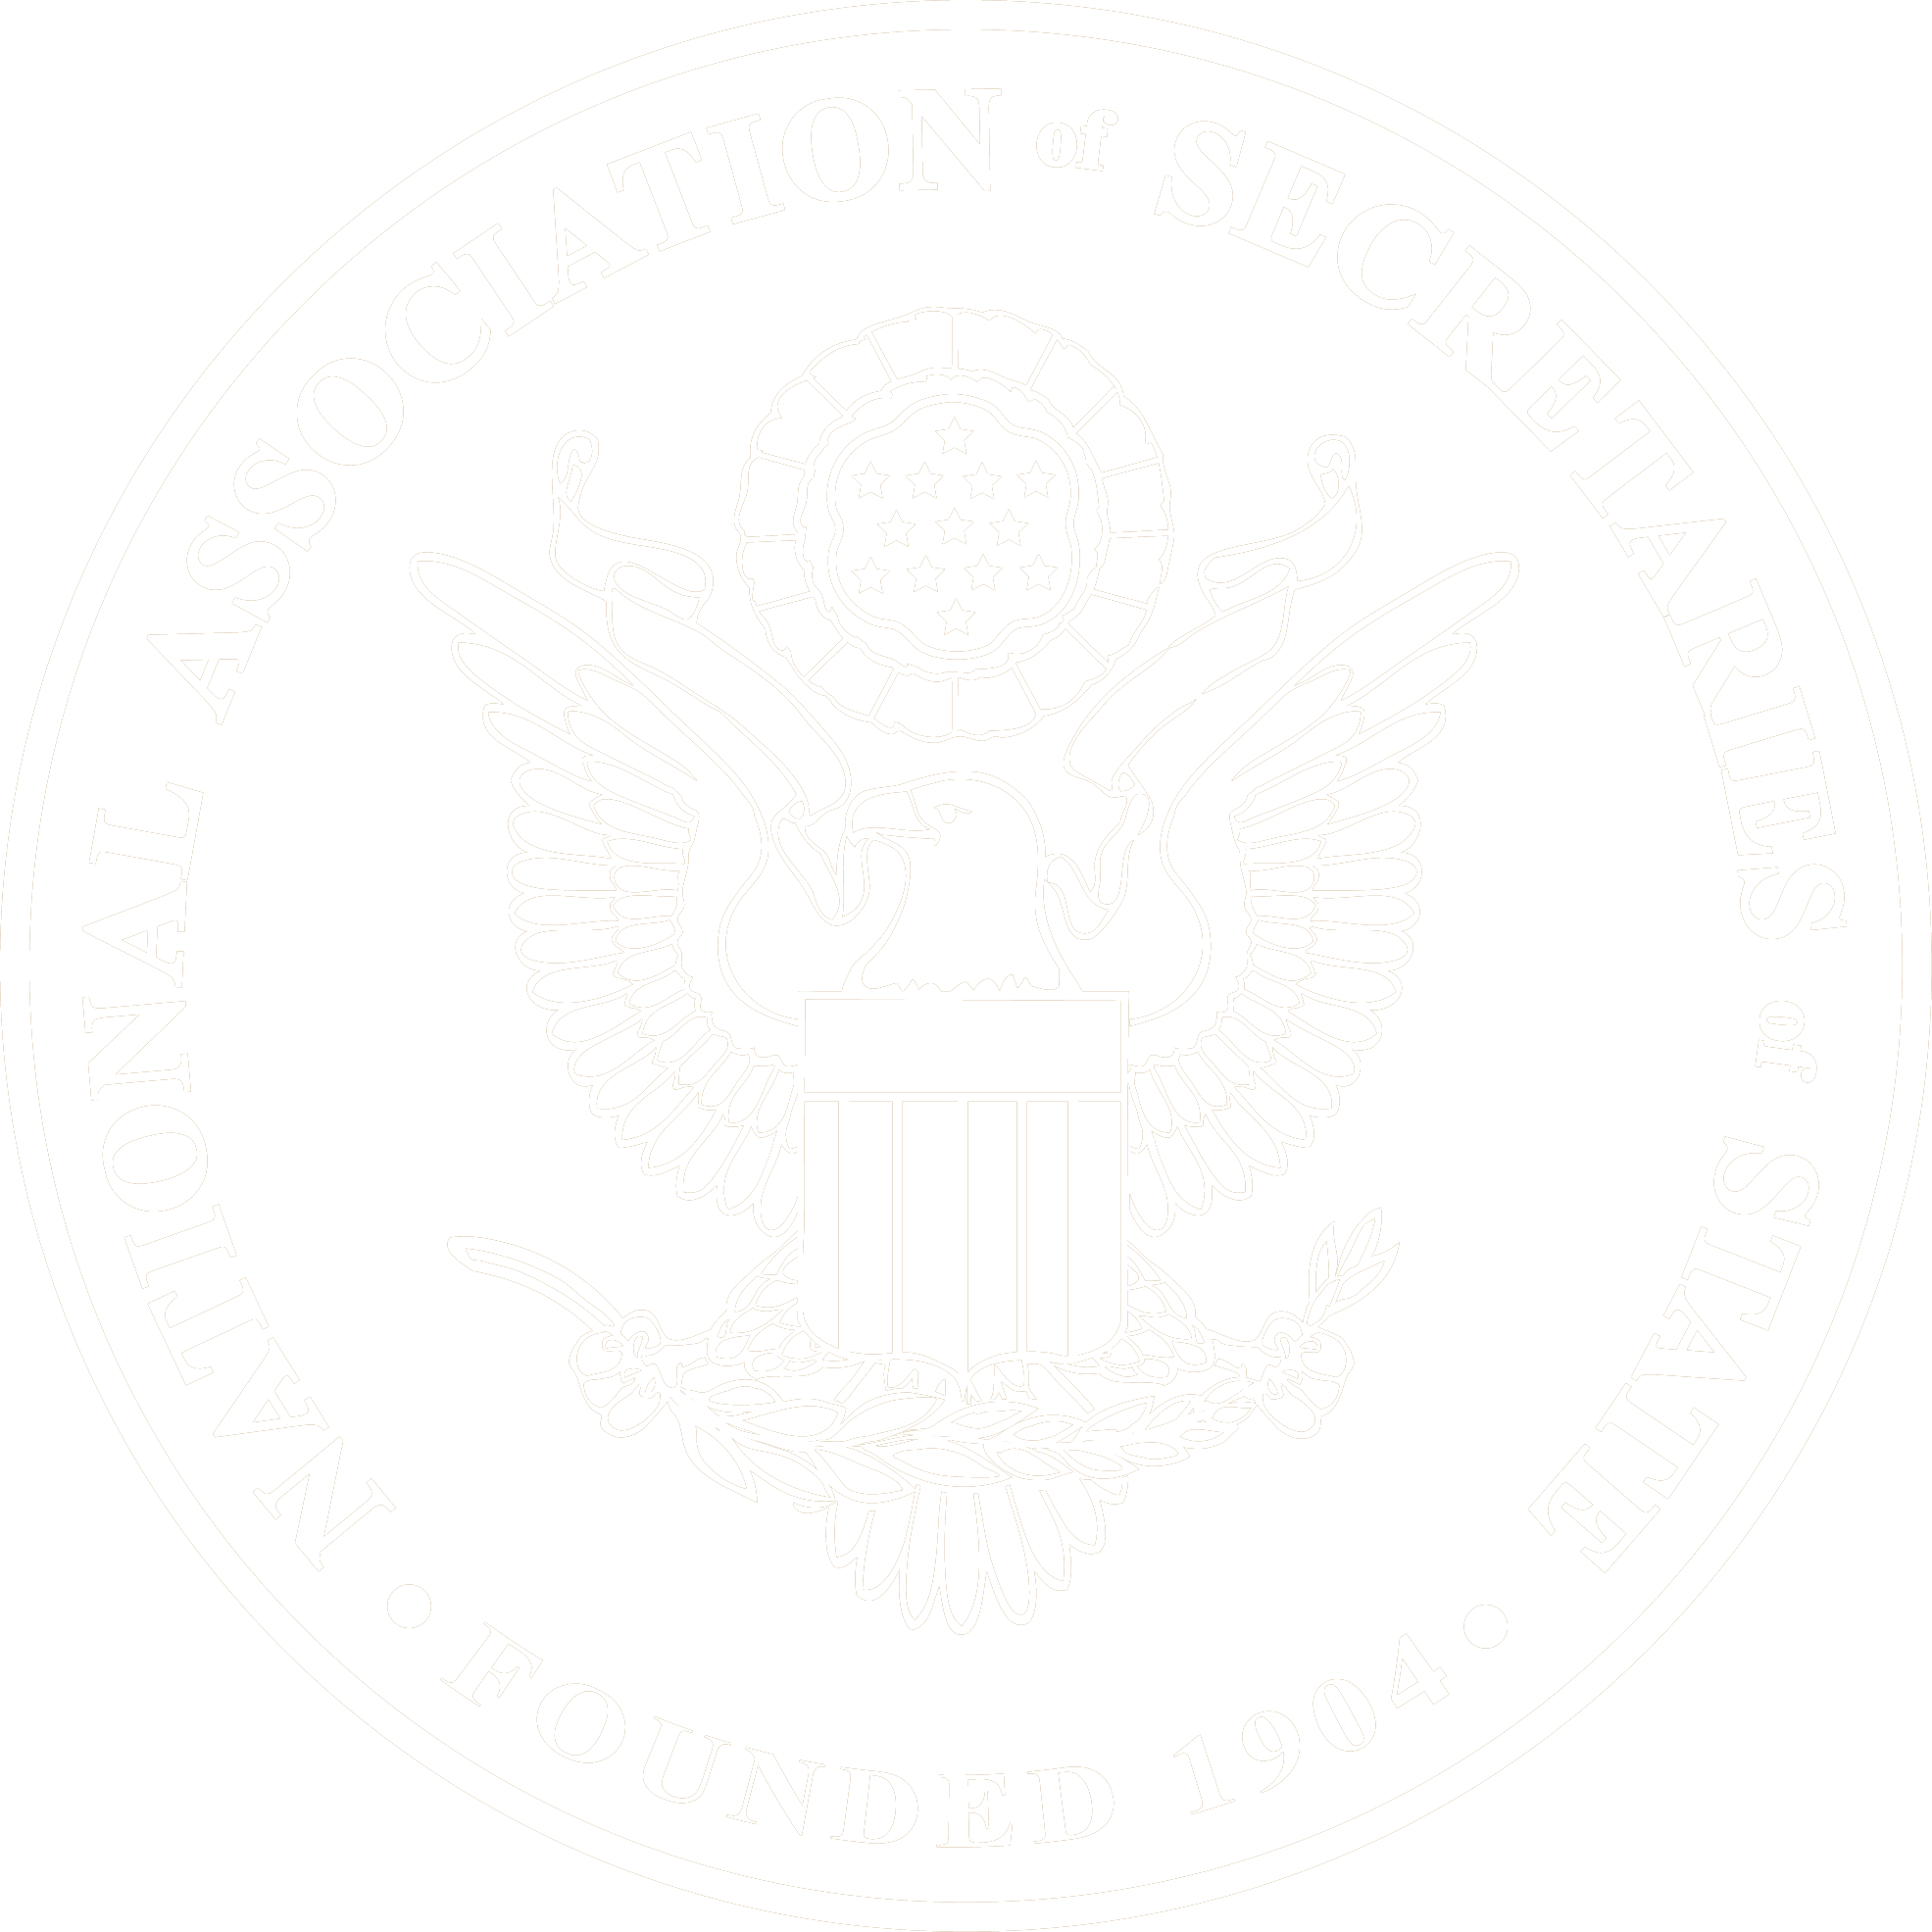 National Association of Secretaries of State